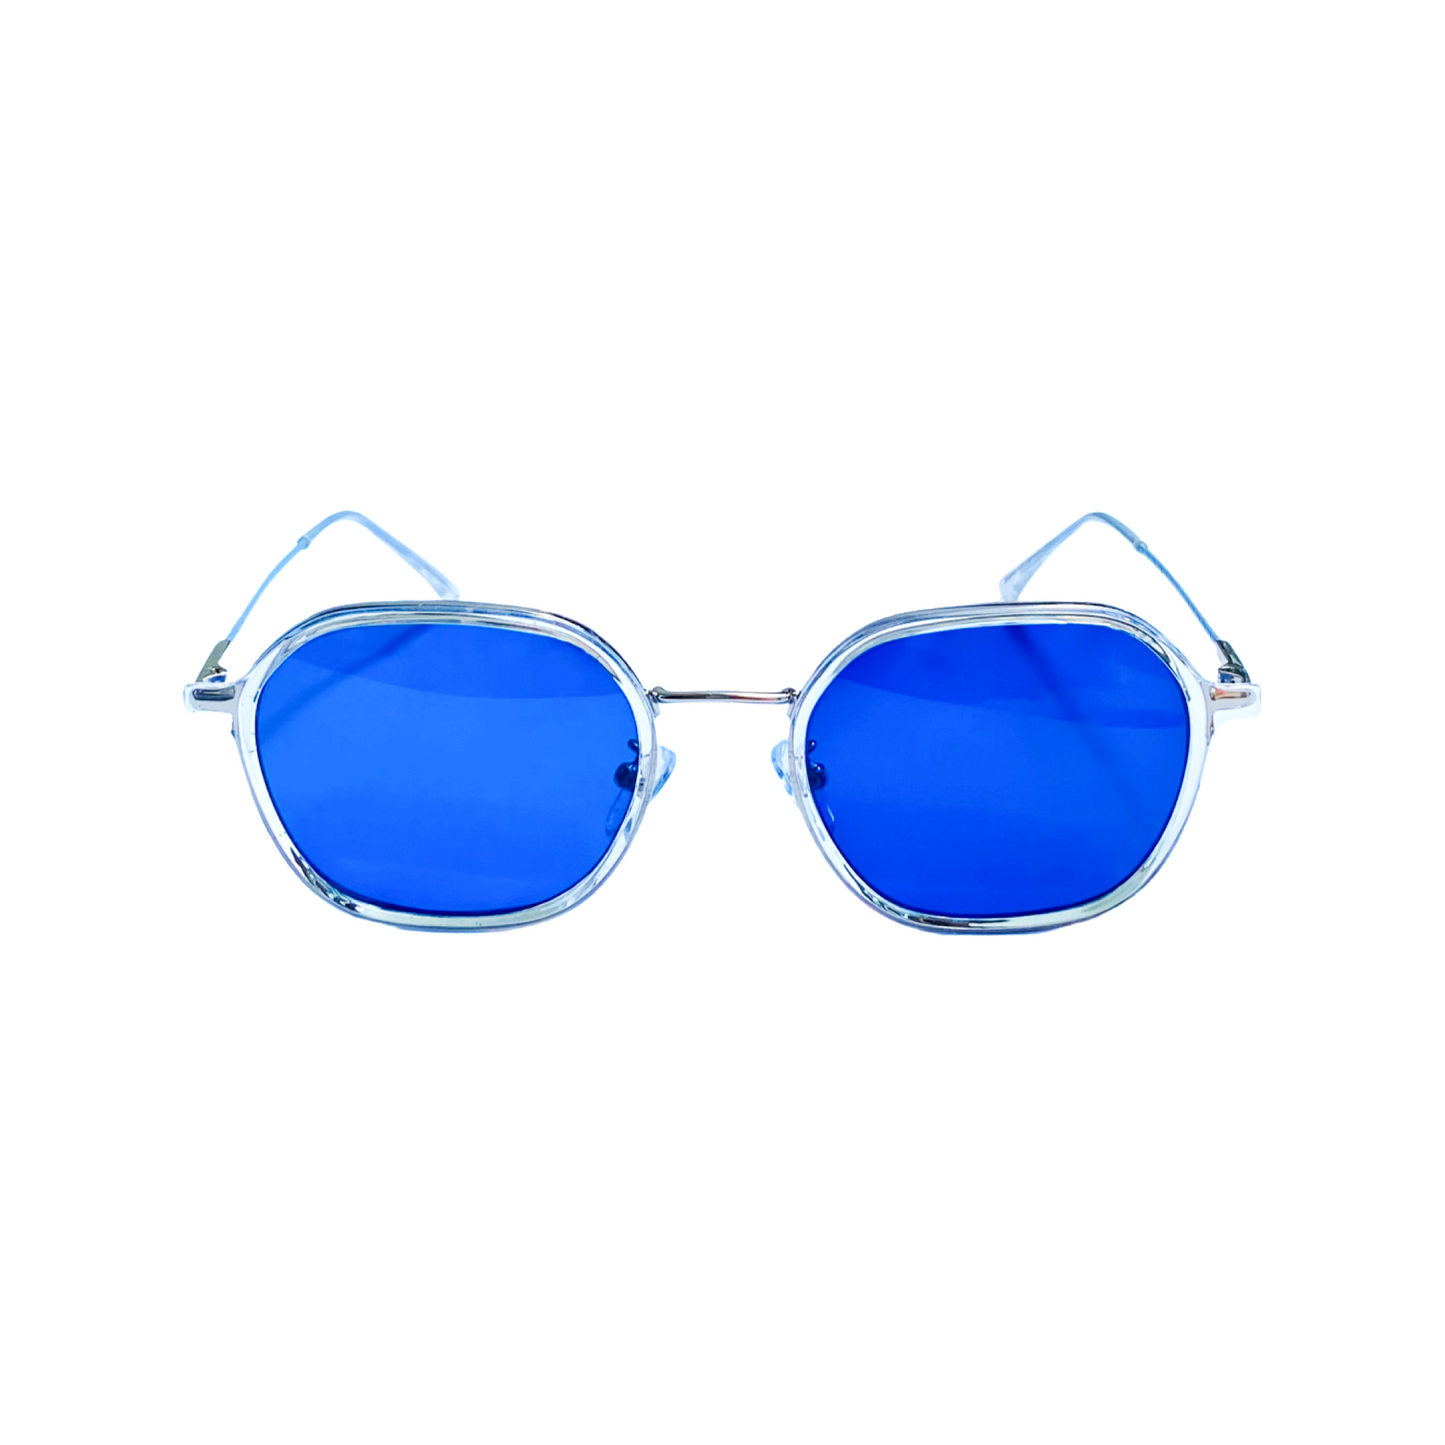 Deep Blue: Blue Sunglasses / Lentes de Sol Azul para Mujer y Hombre